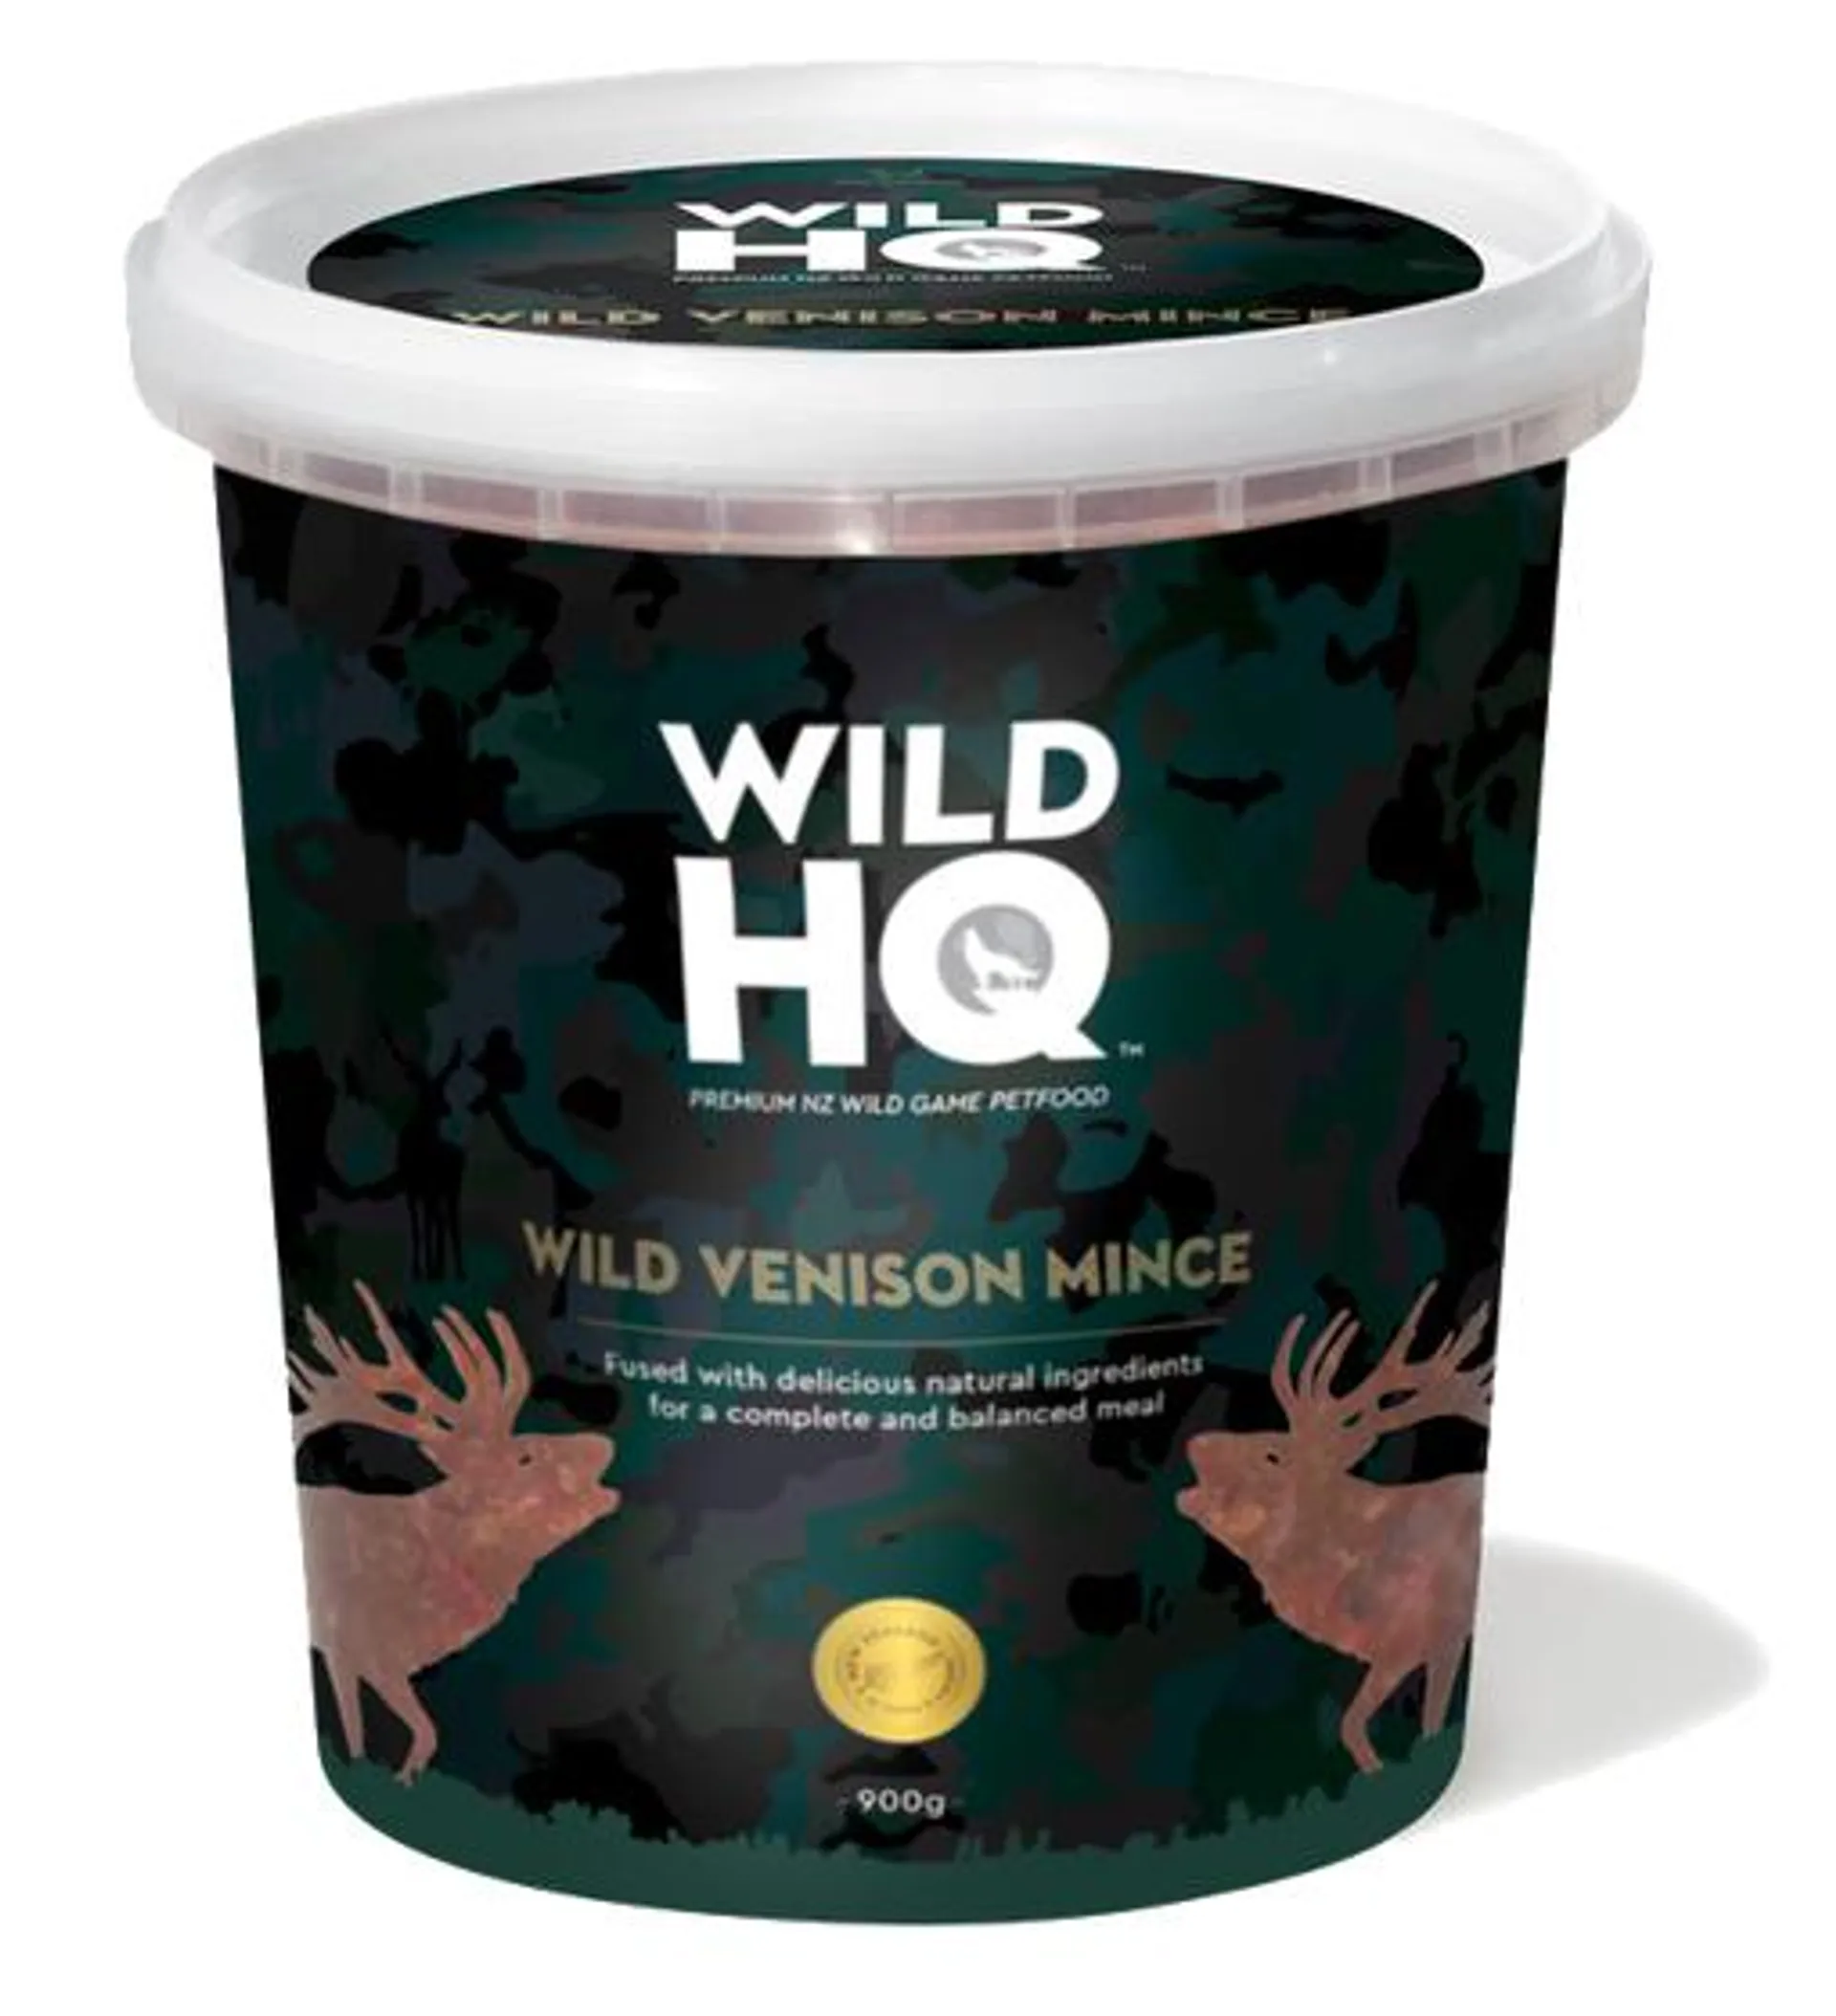 Wild Hq Venison Mince Dog Food 900g